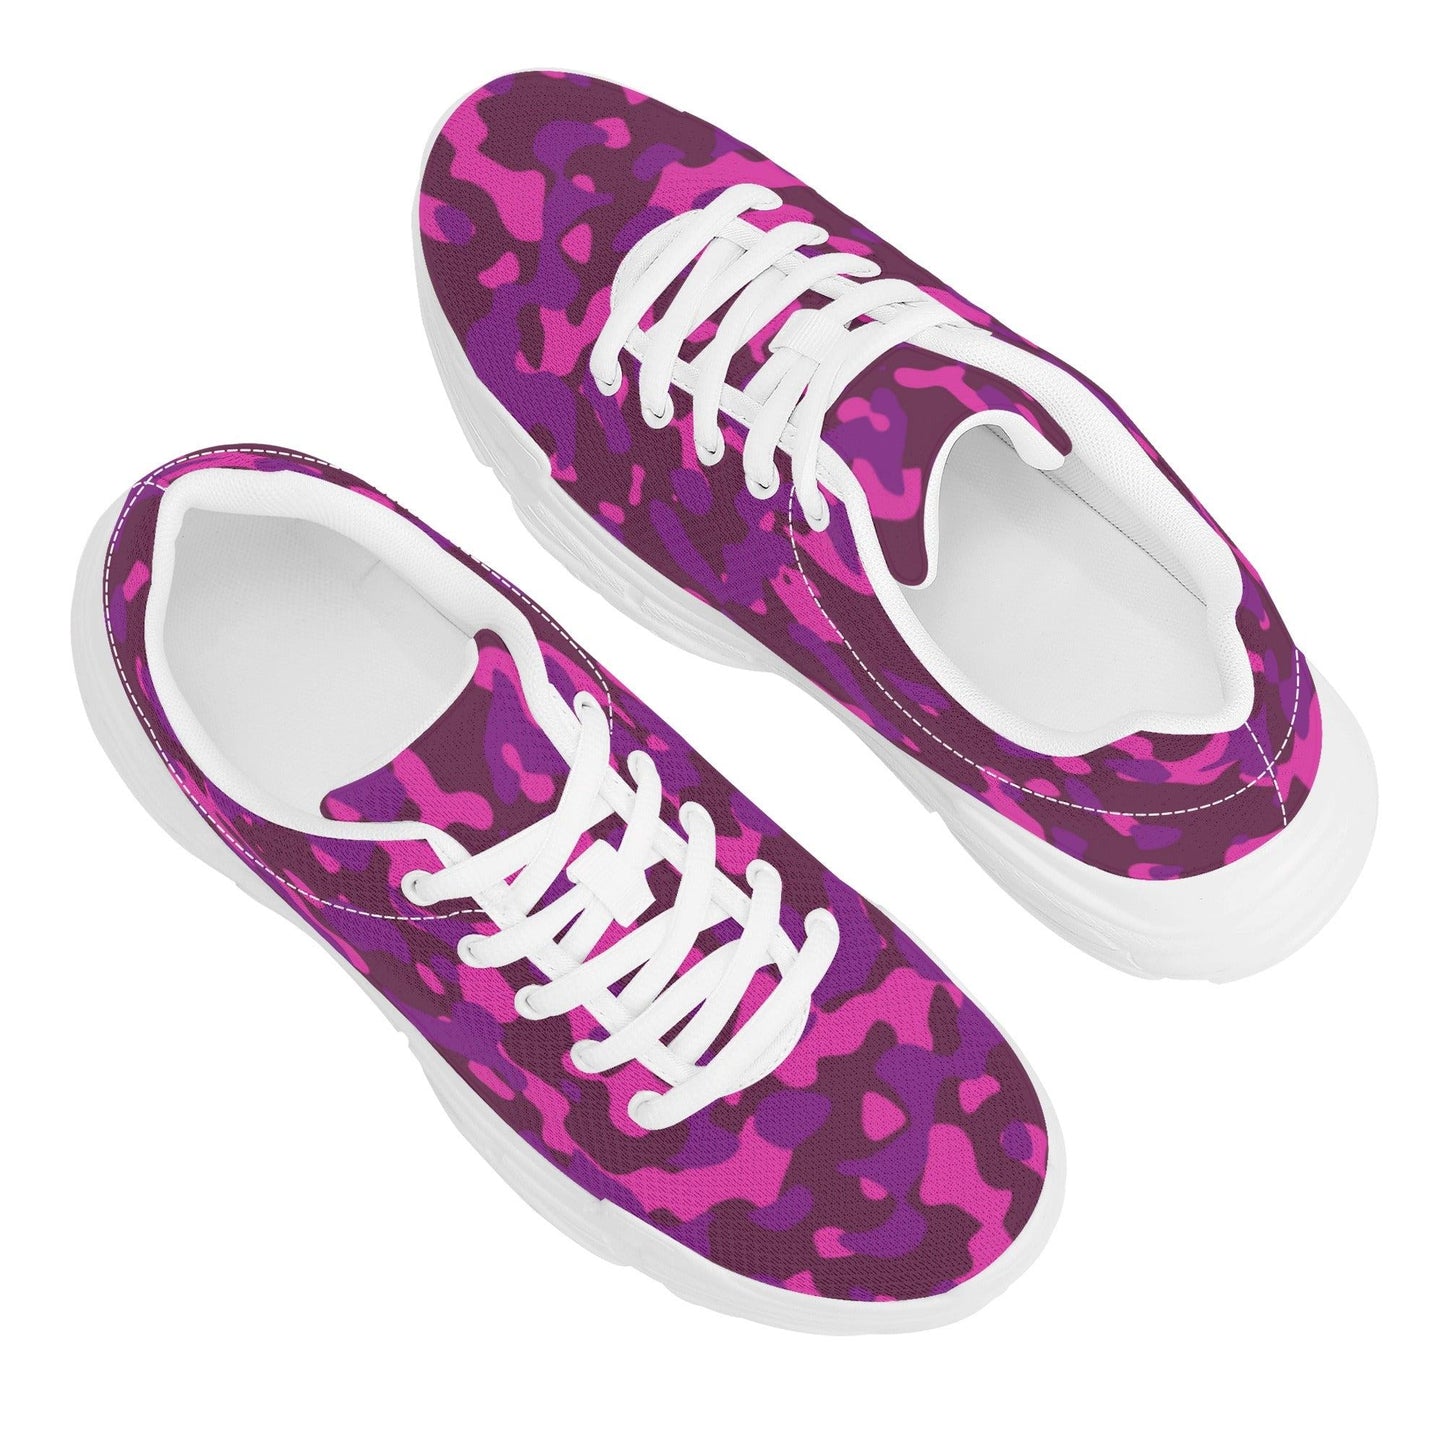 Pink Camouflage Herren Chunky Sneakers Schuhe 79.99 Camouflage, Herren, Pink, Schuhe, Sneaker JLR Design